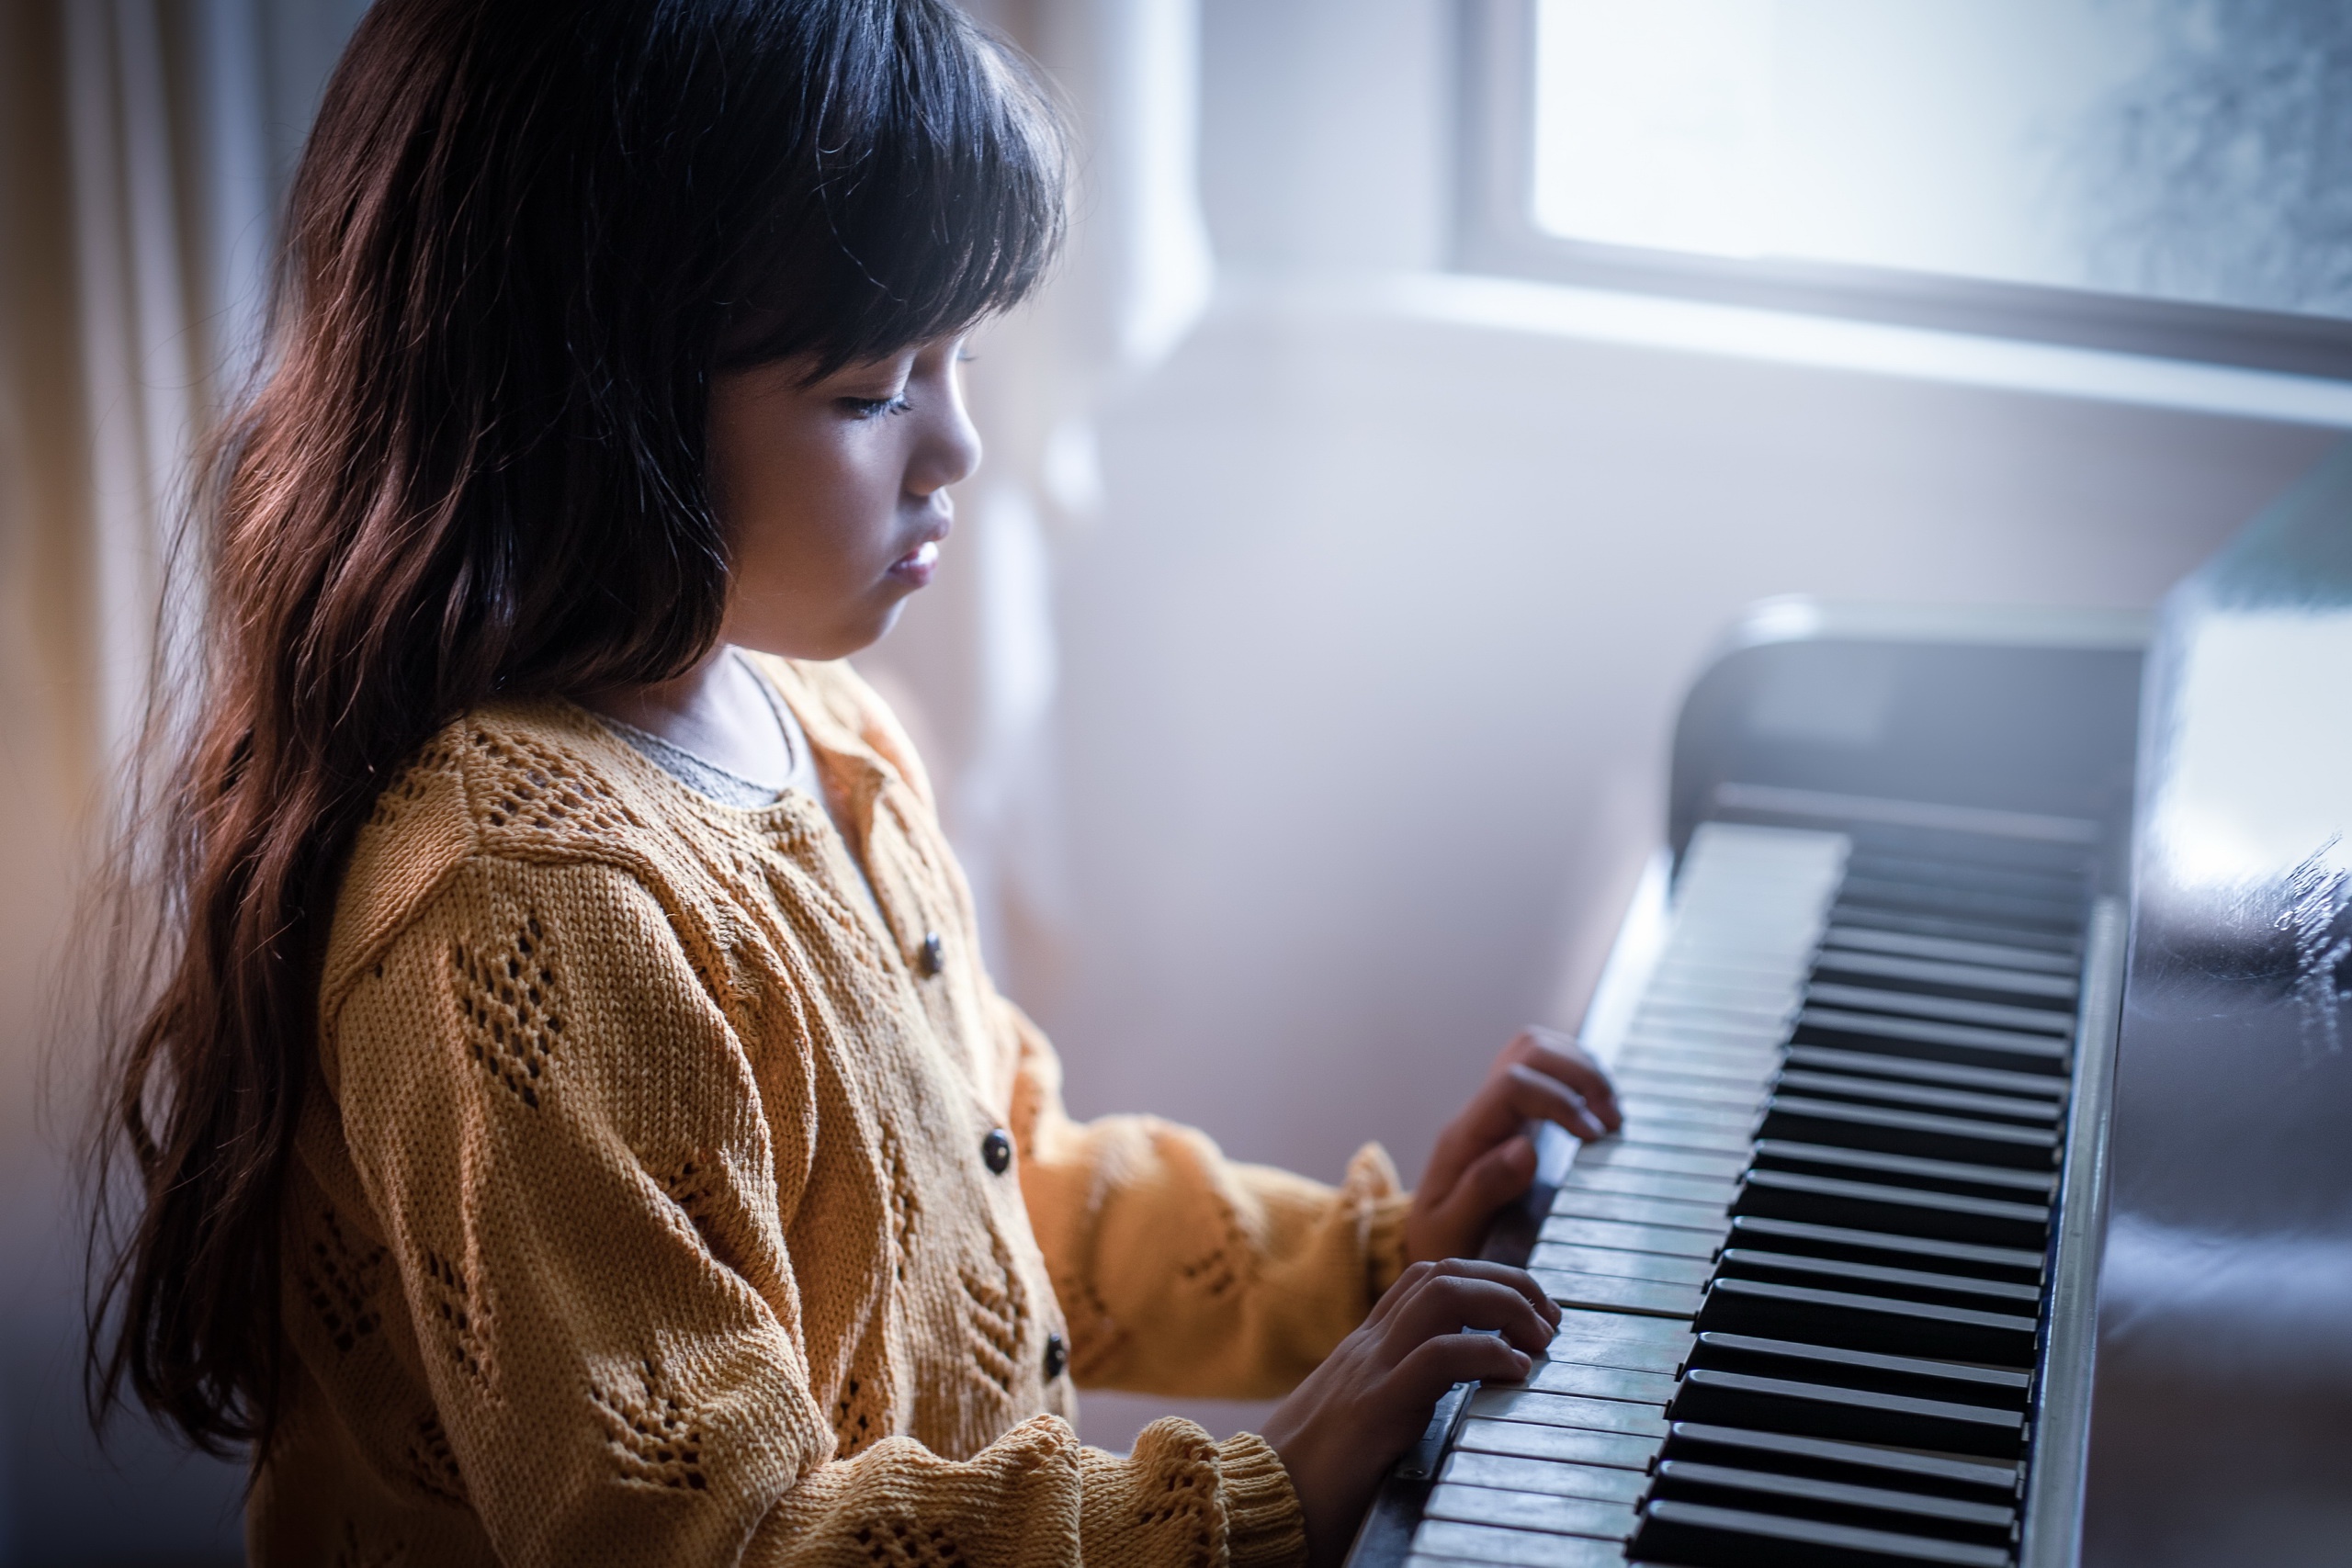 Музыка игра на фортепиано. Фортепиано для детей. Пианино для детей. Пианино для девочек. Девочка за пианино.